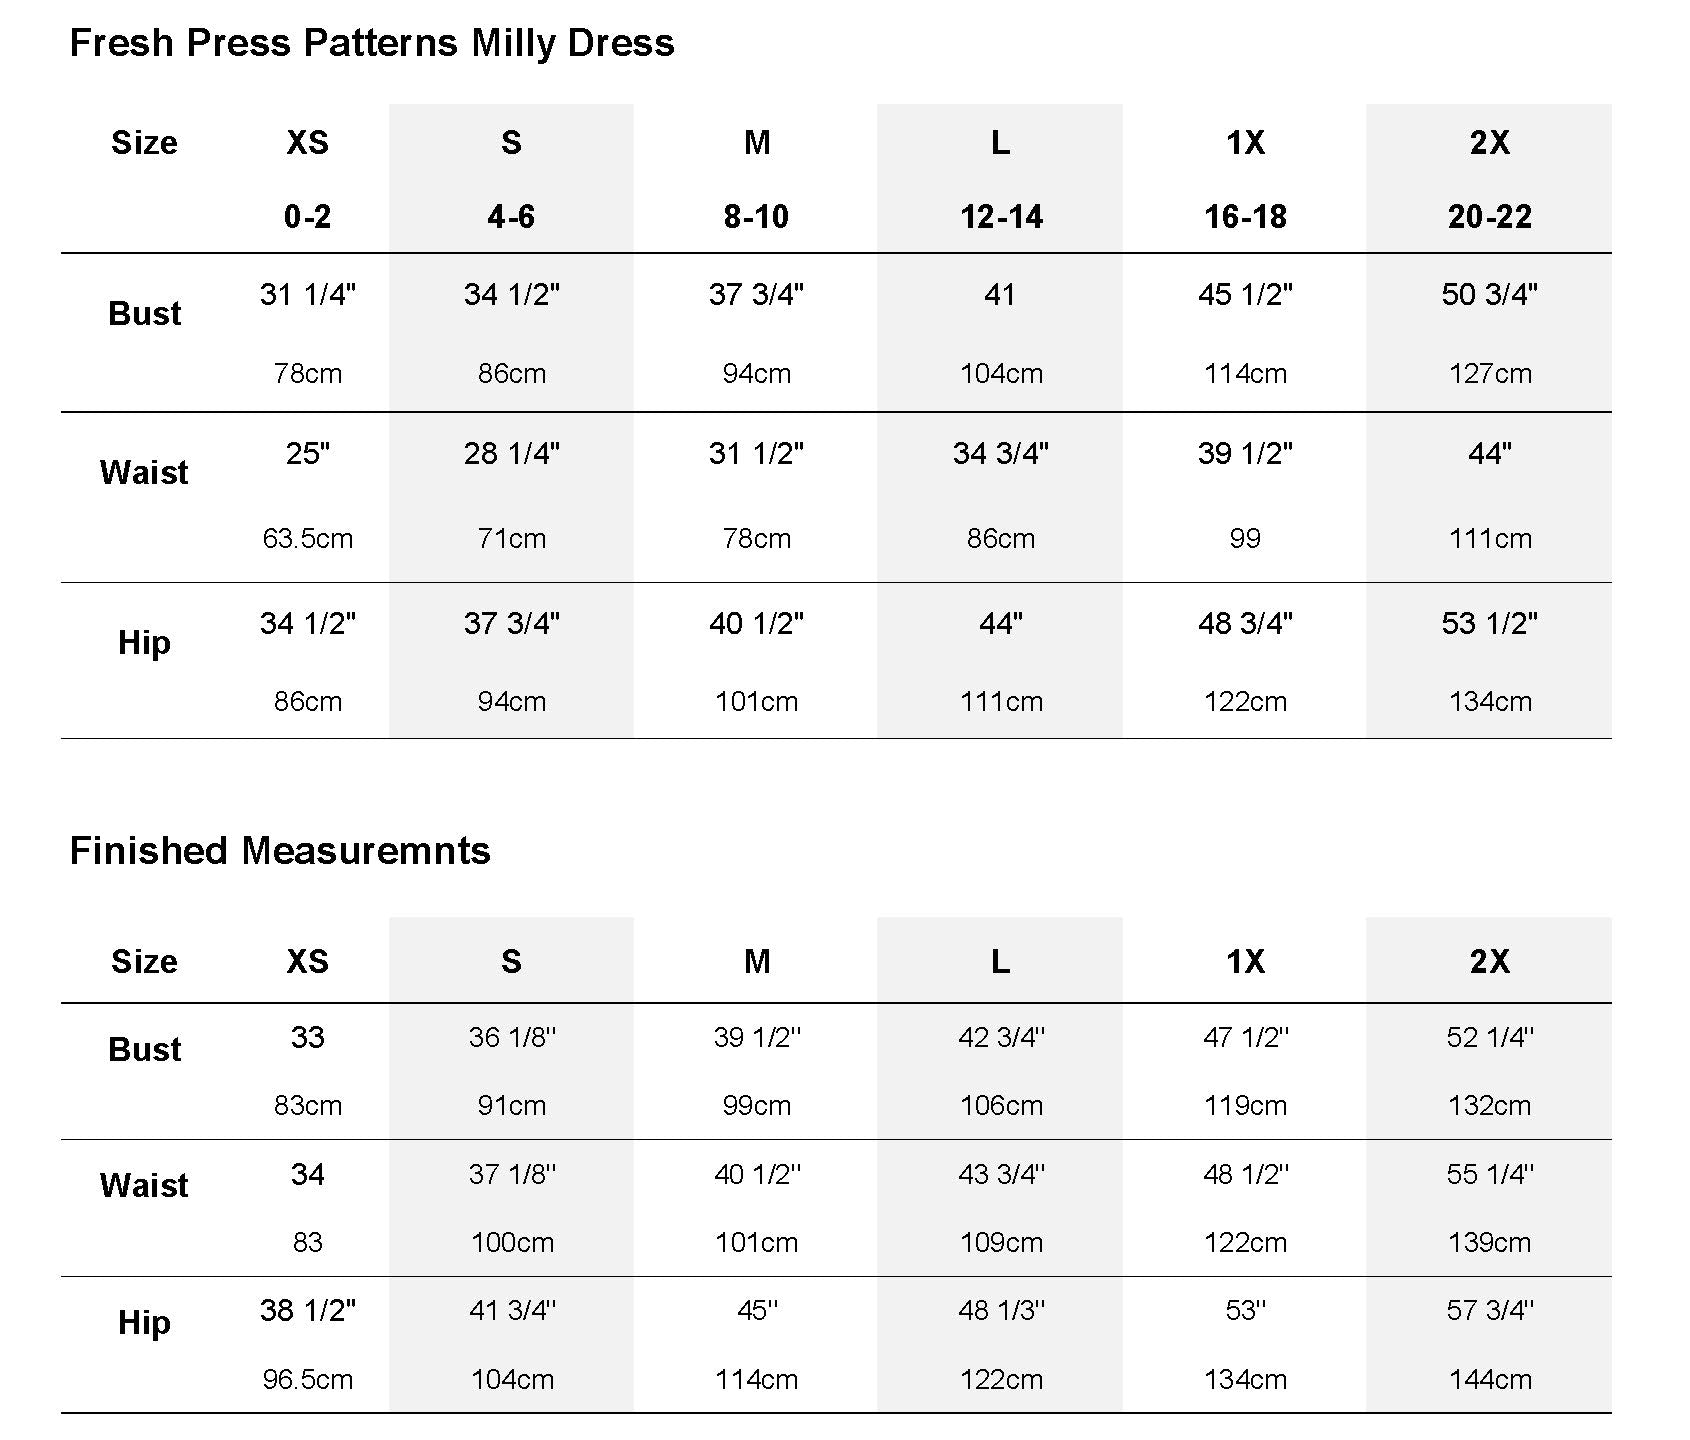 Milly Dress – Fresh Press Patterns